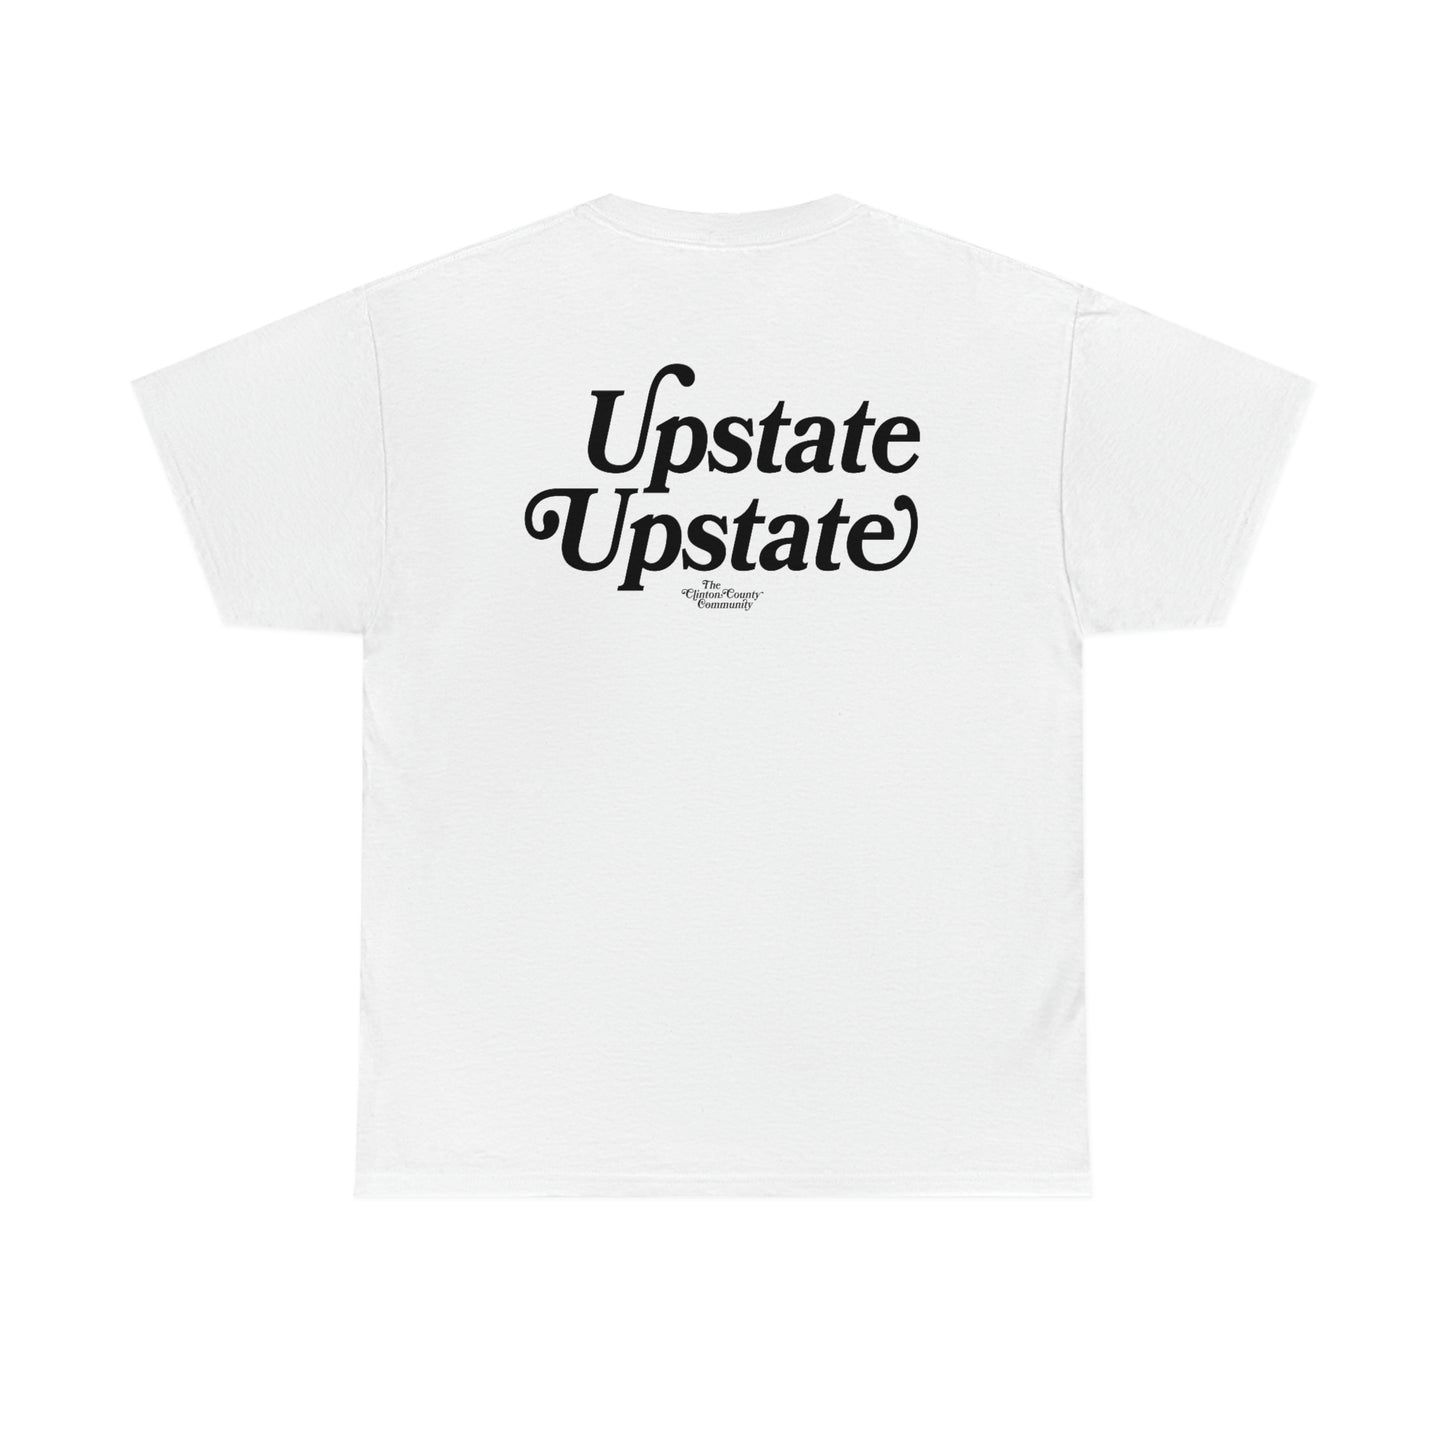 The Upstate Upstate T-Shirt